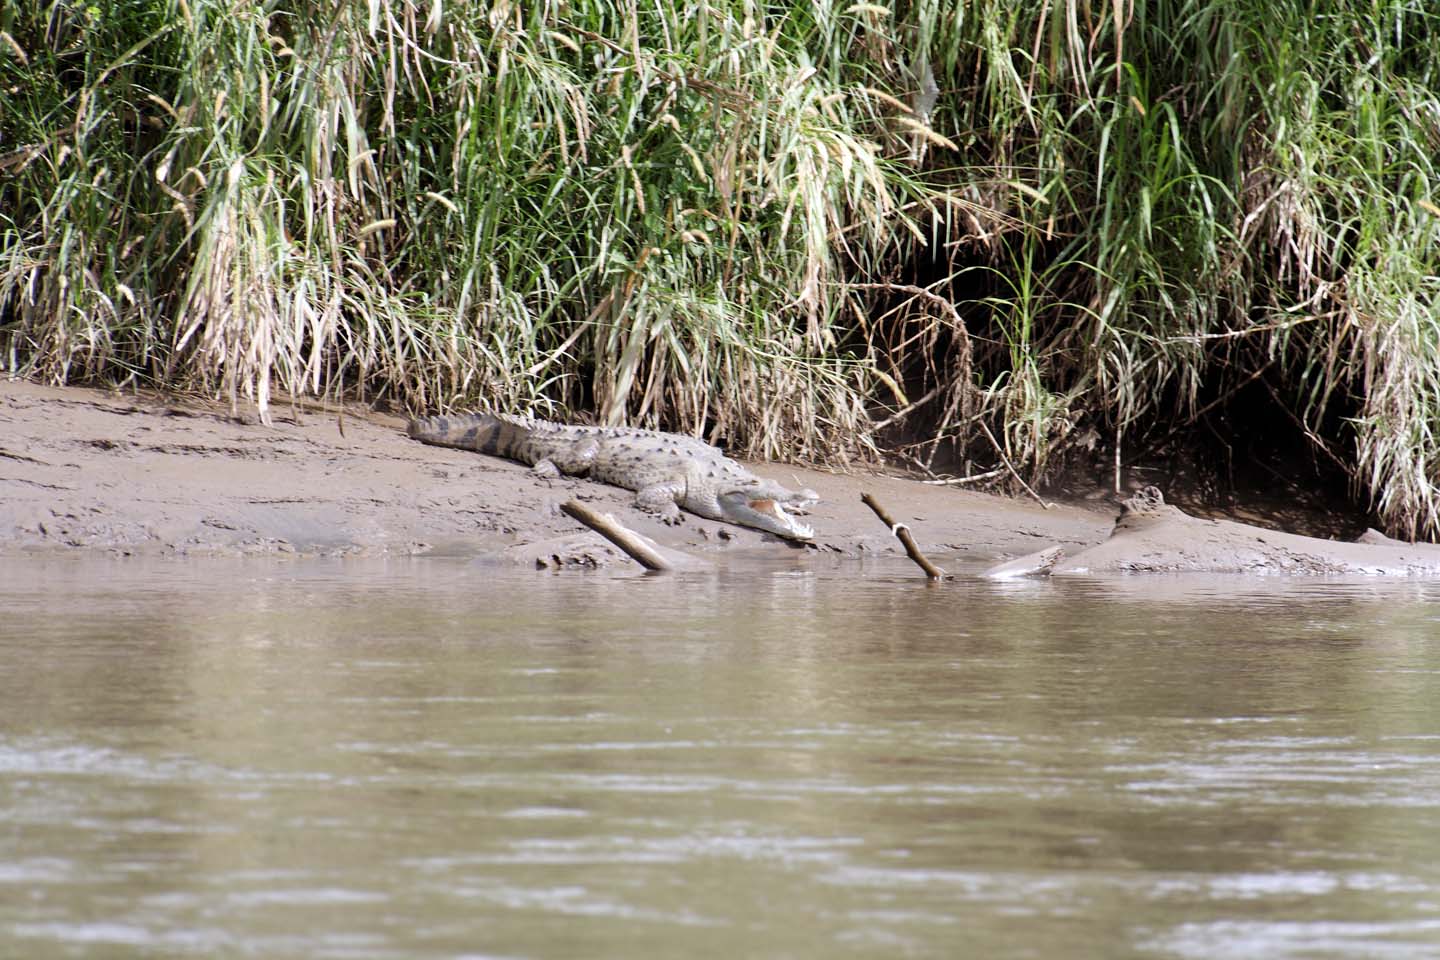 Bild 1: Crocodiles